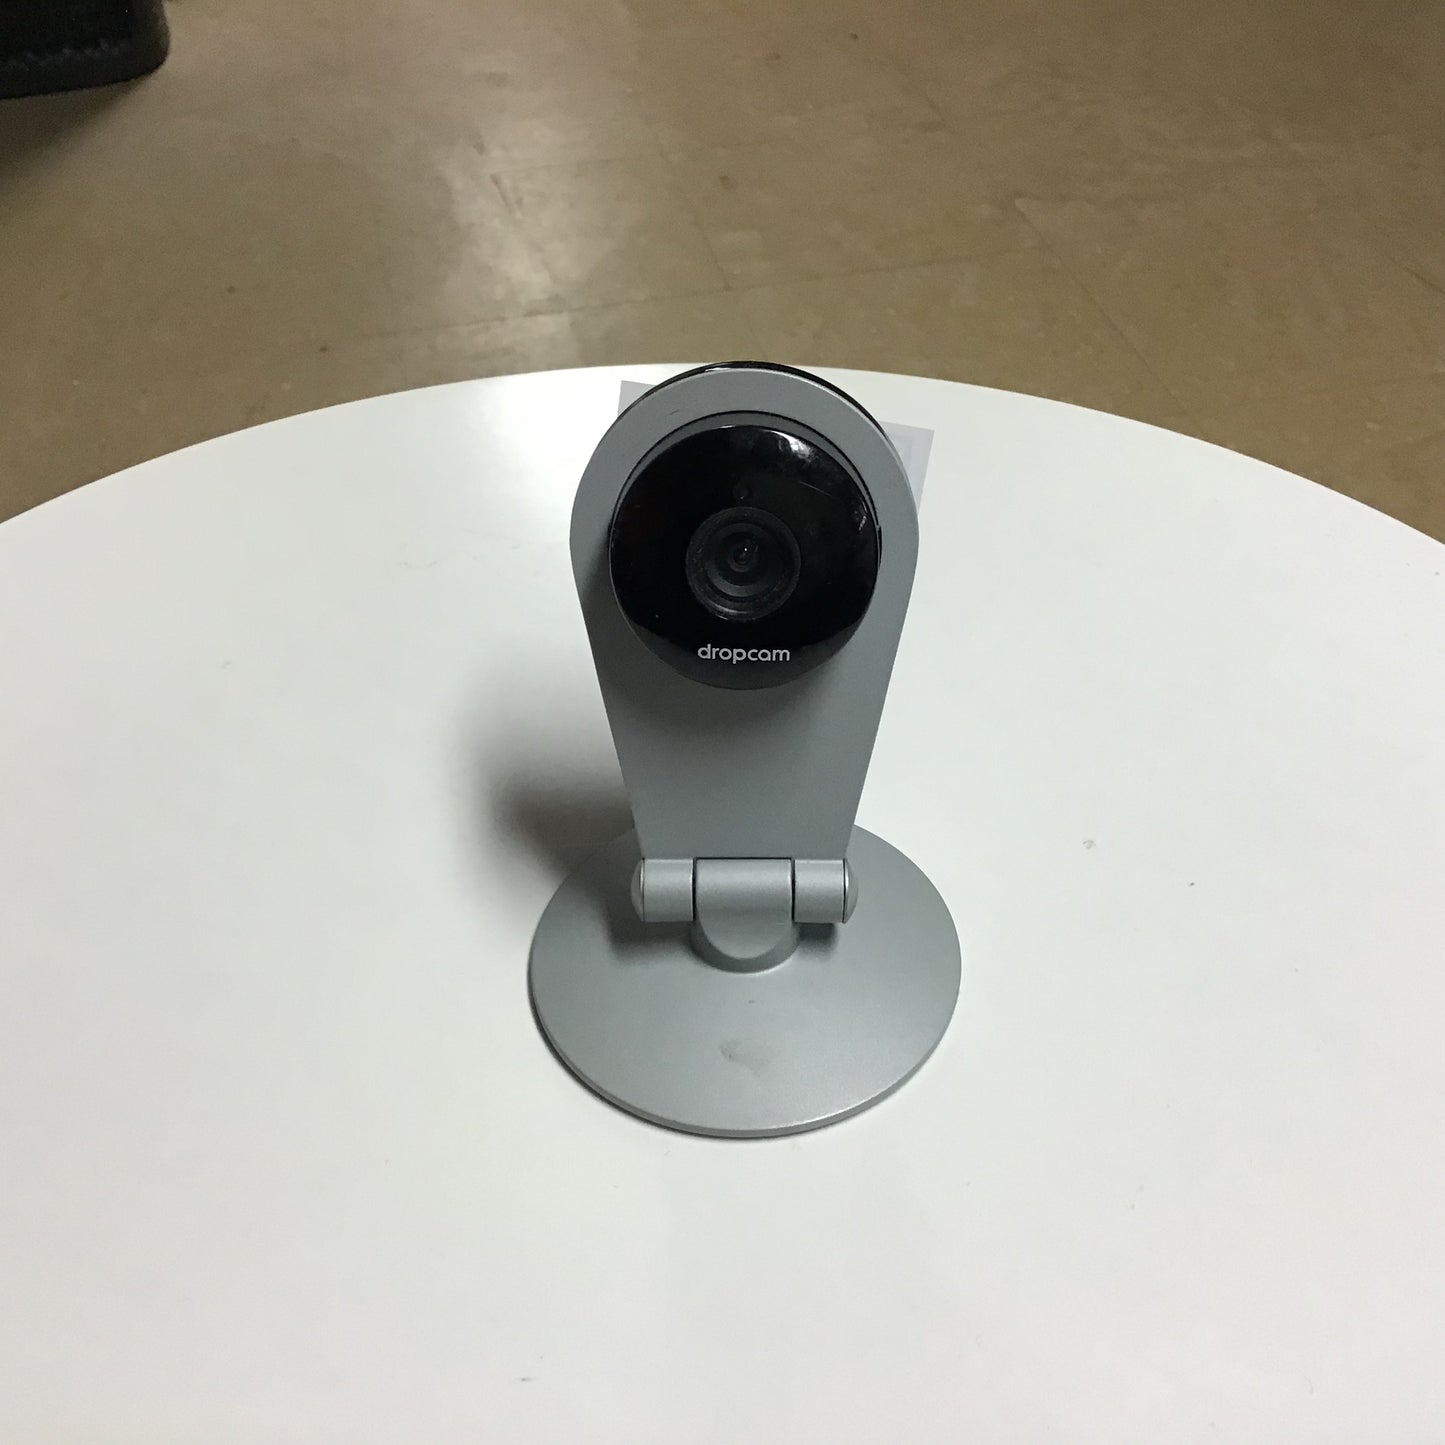 Dropcam Wireless Video Monitor Camera